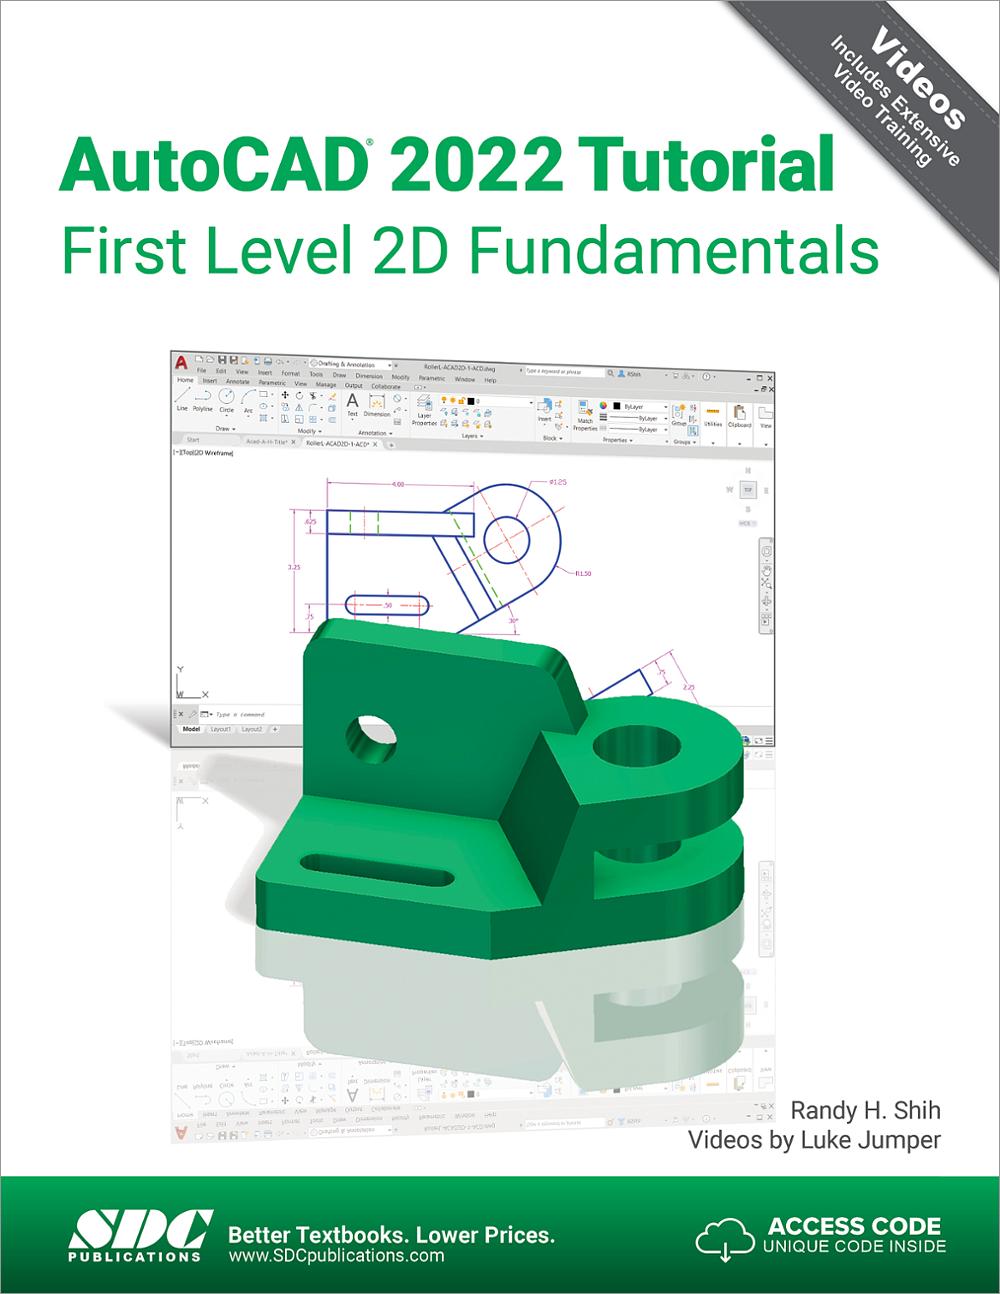 autodesk quantity takeoff tutorial pdf